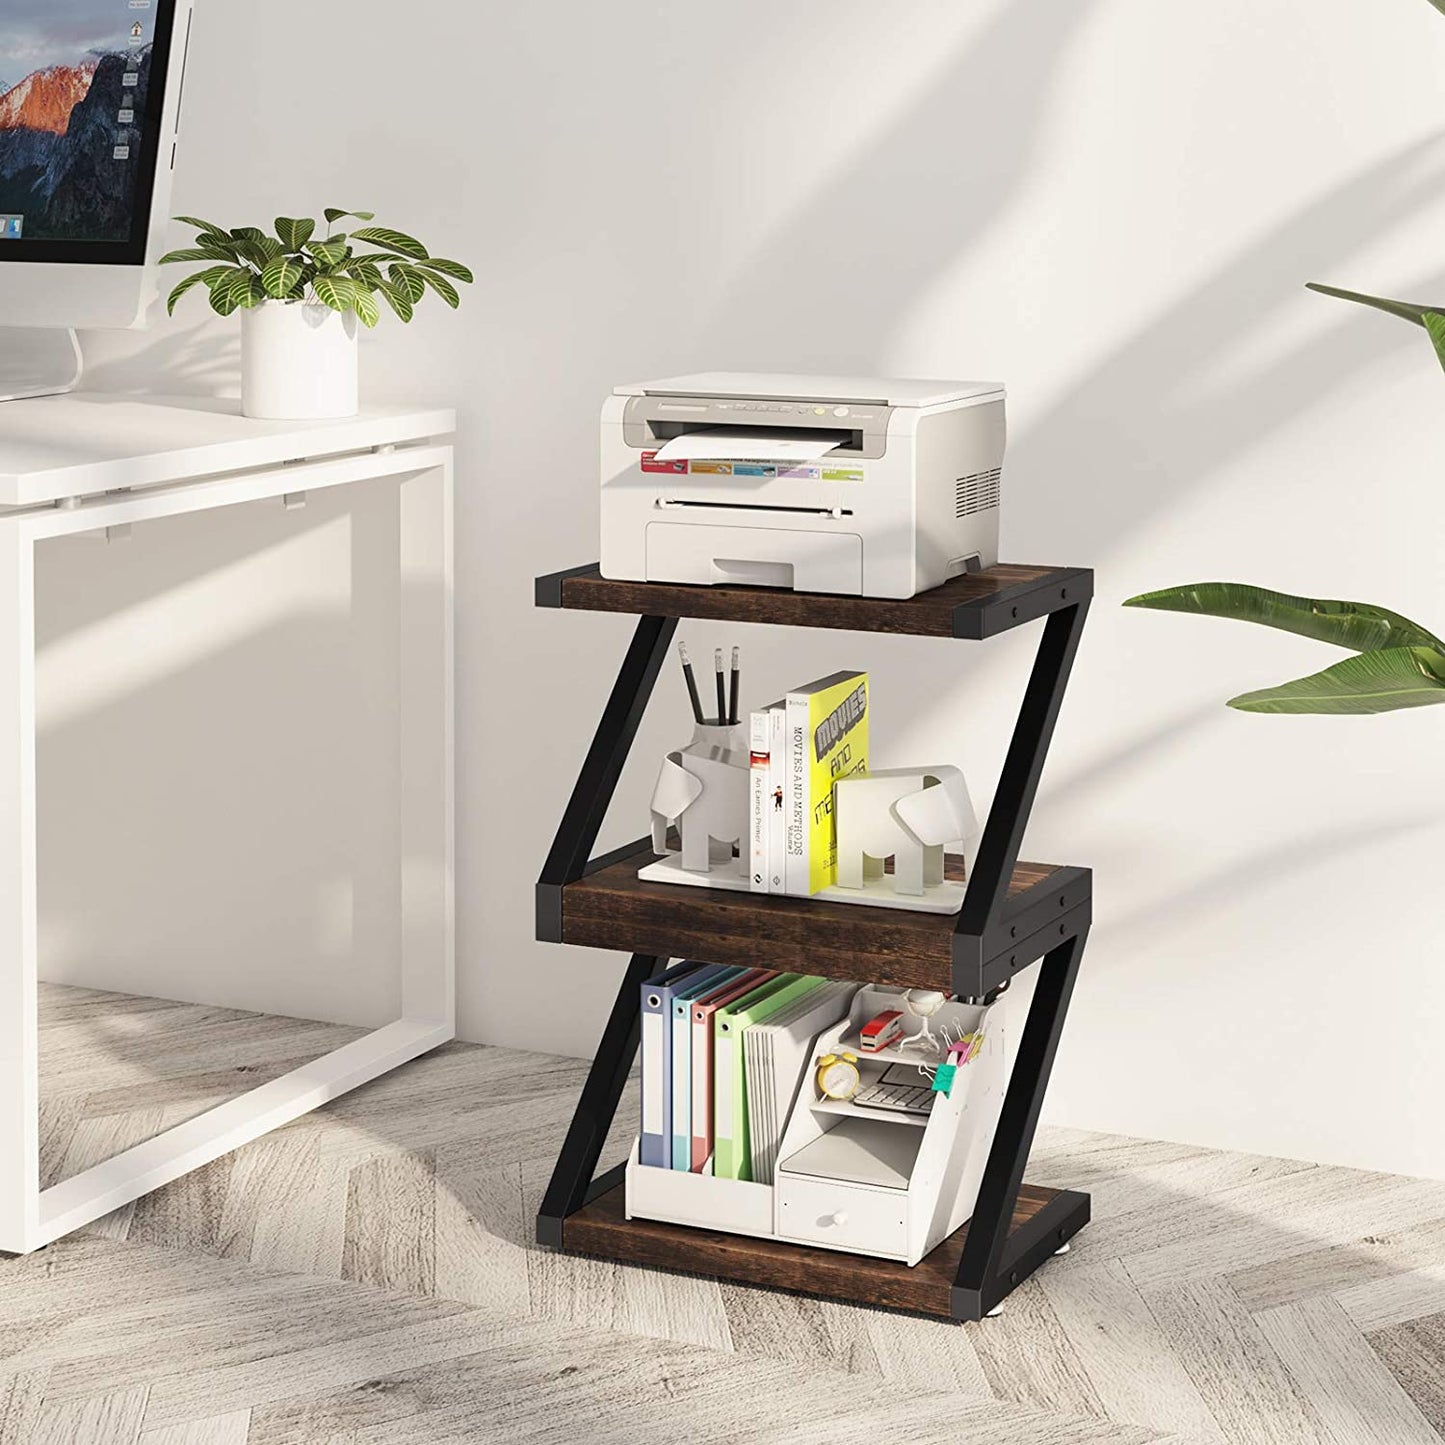 Desktop Printer Stand with Storage - Printer Shelf Organizer with Anti-Skid Pads, 2-Tier Tray, and Steel Hardware (Dark Brown)